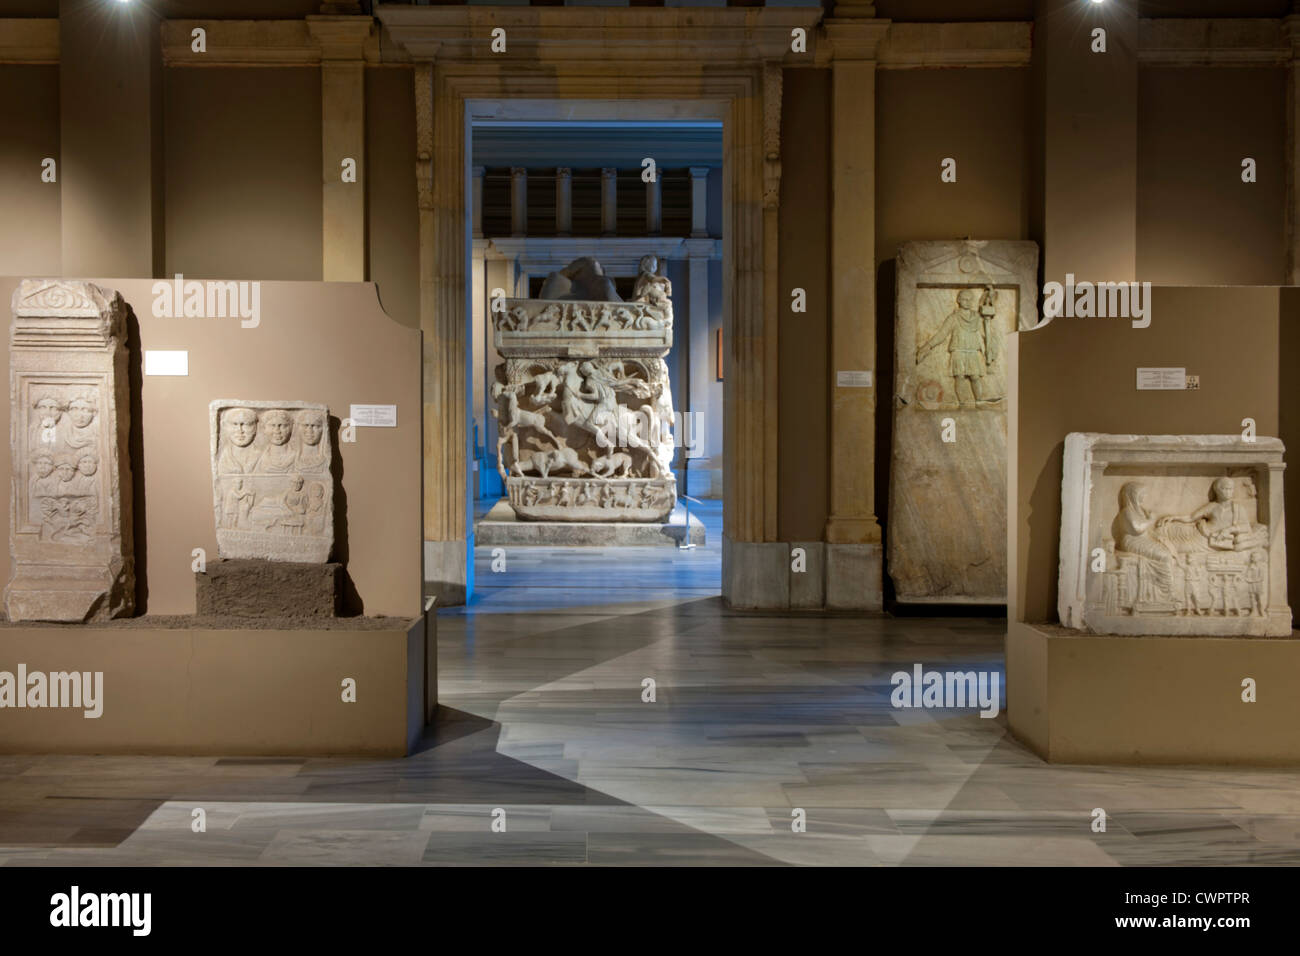 Türkei, Istanbul, Sultanahmet, Saal im Archäologischen Museum. Stock Photo